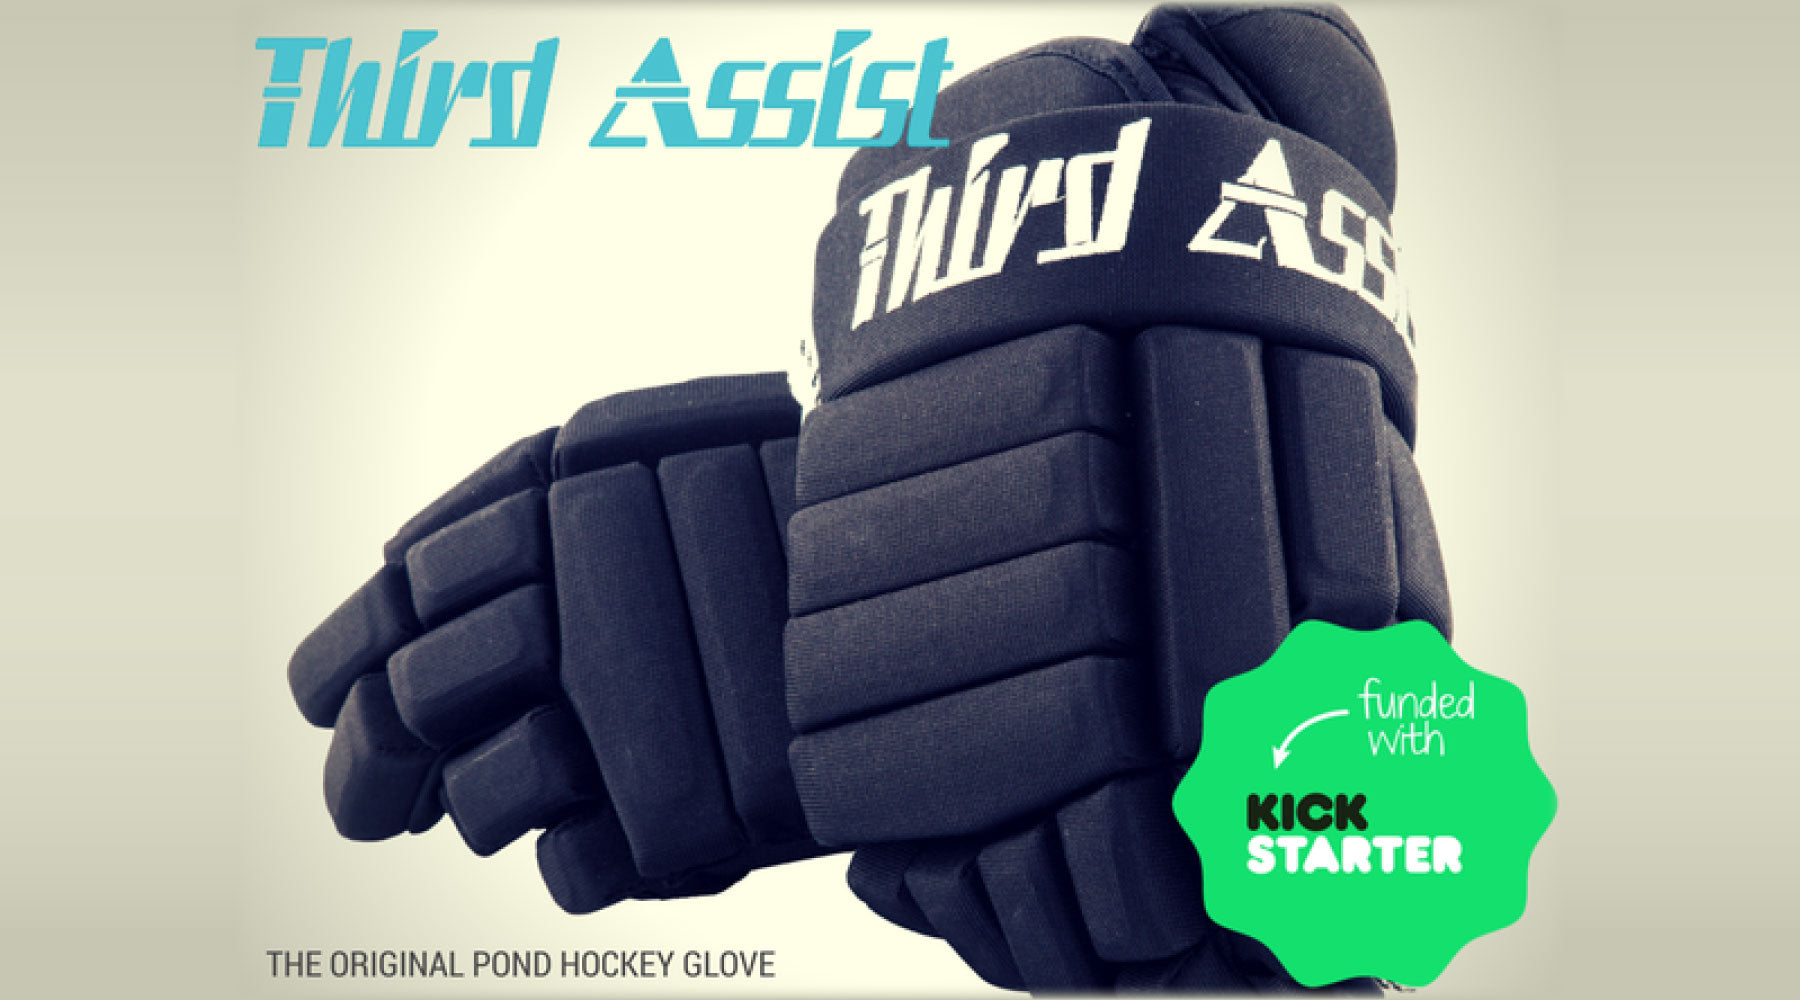 Image of Third Assist's Original Pond Hockey Gloves.